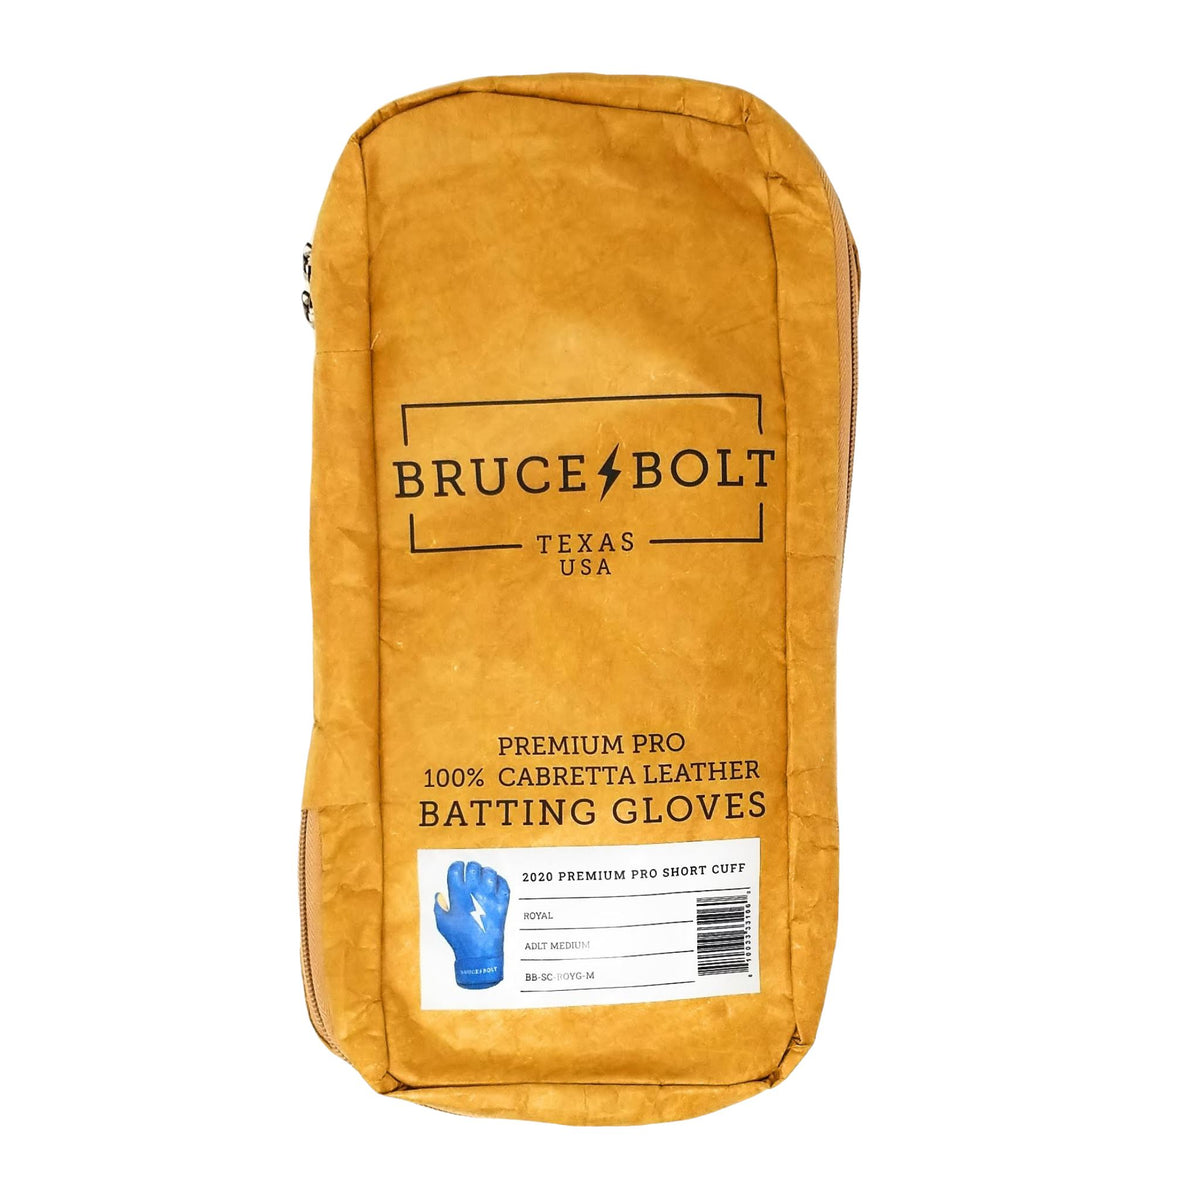 Bruce+Bolt Premium Pro Happ Series Men's Short Cuff Batting Gloves